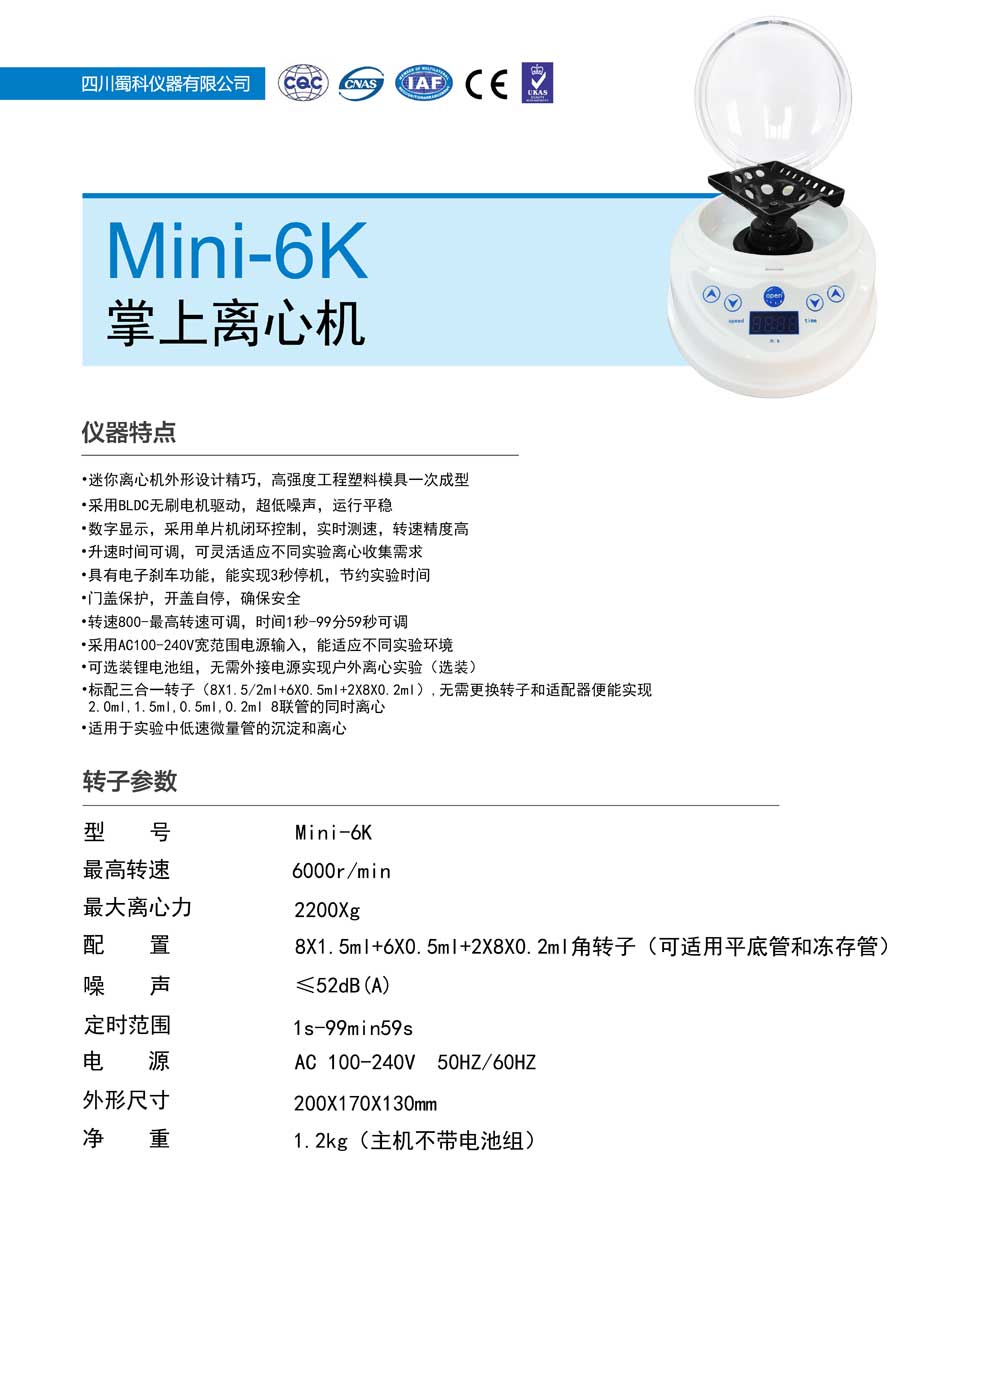 Mini-6K-彩页.jpg